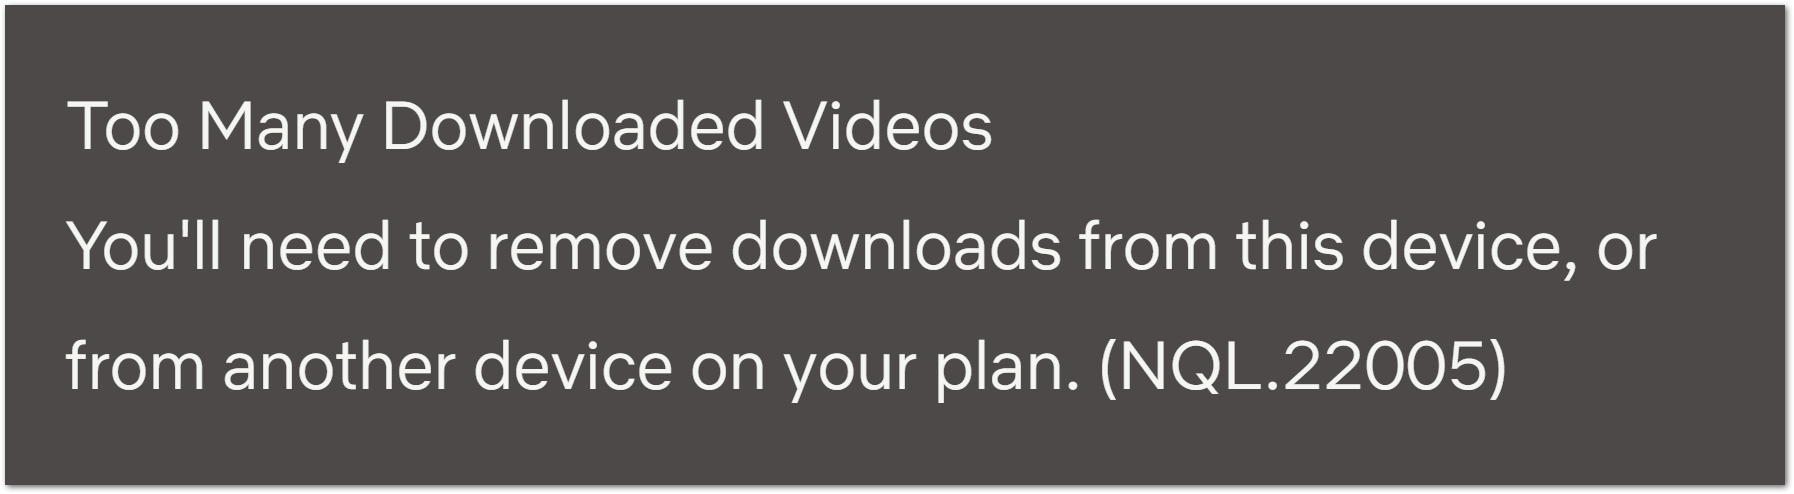 Netflix download limit error, too many downloaded videos, NQL.22005